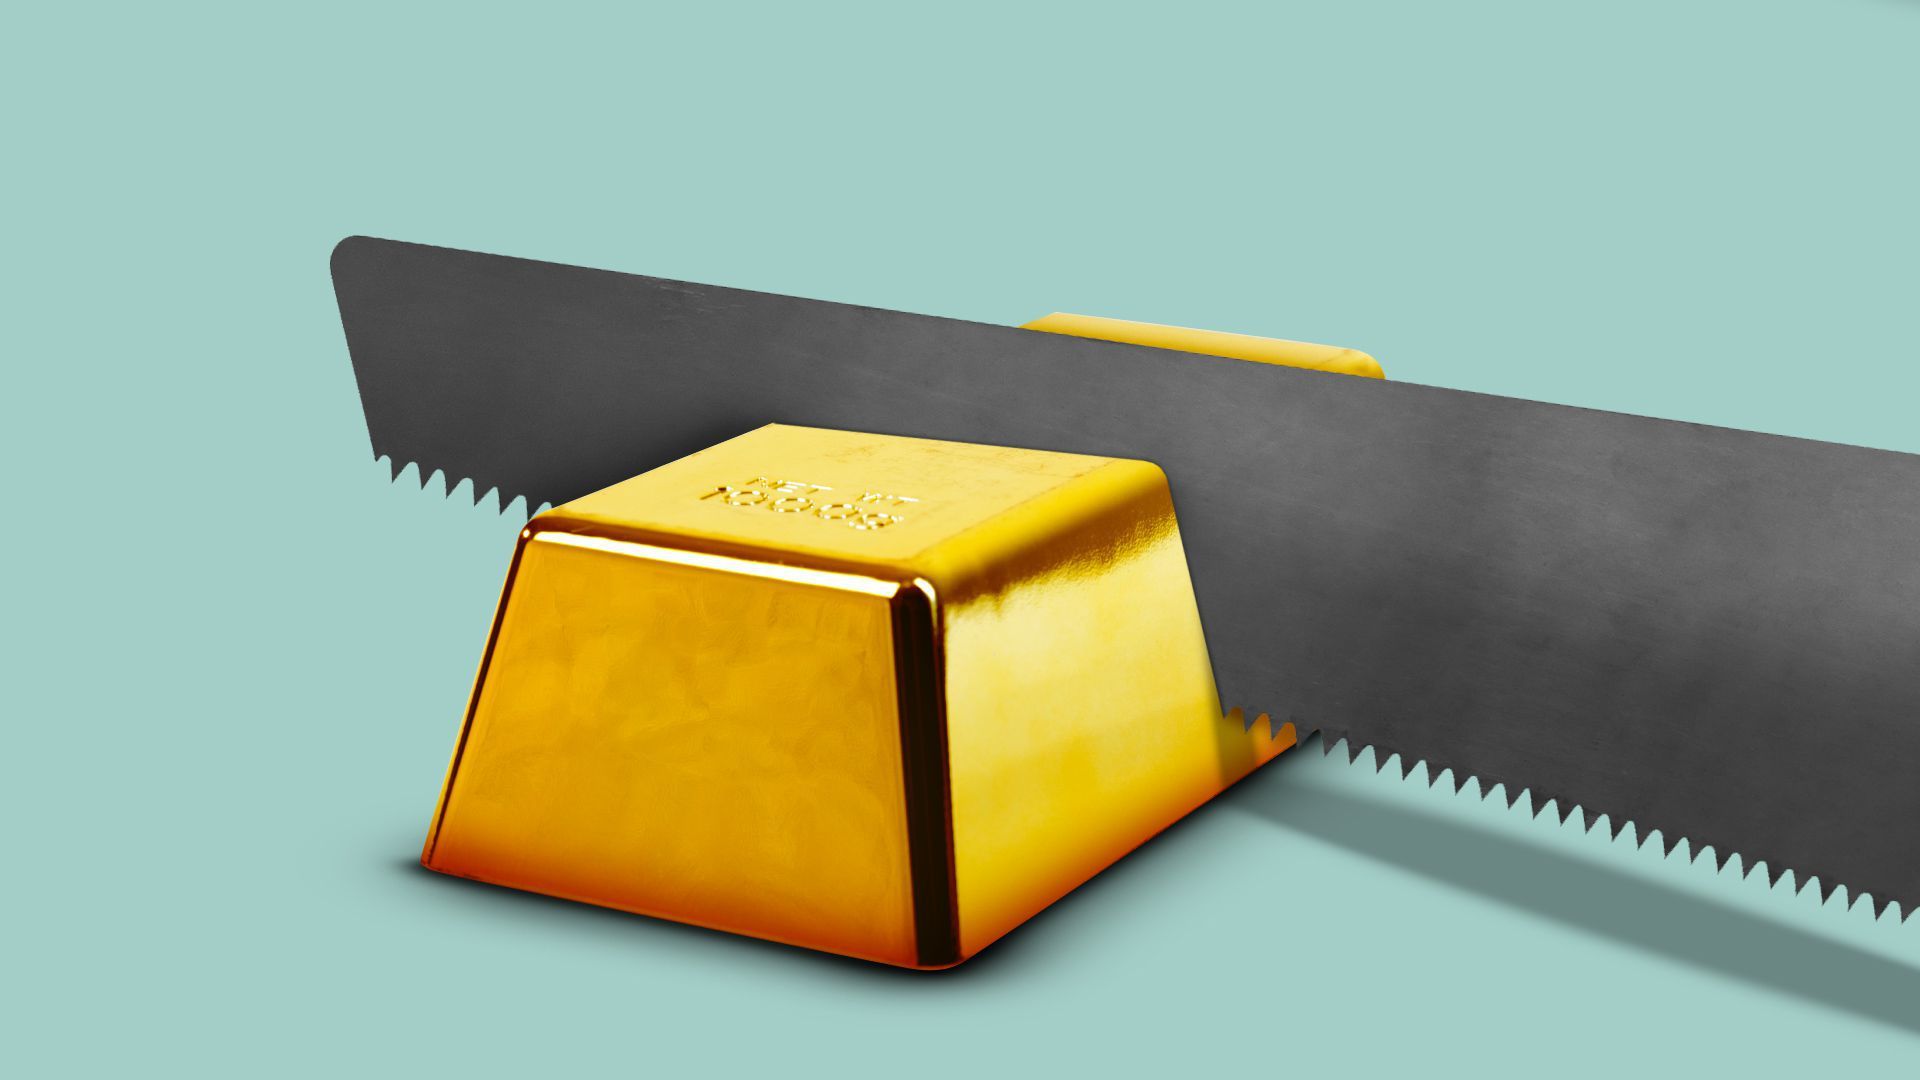 Illustration of a saw cutting through gold.